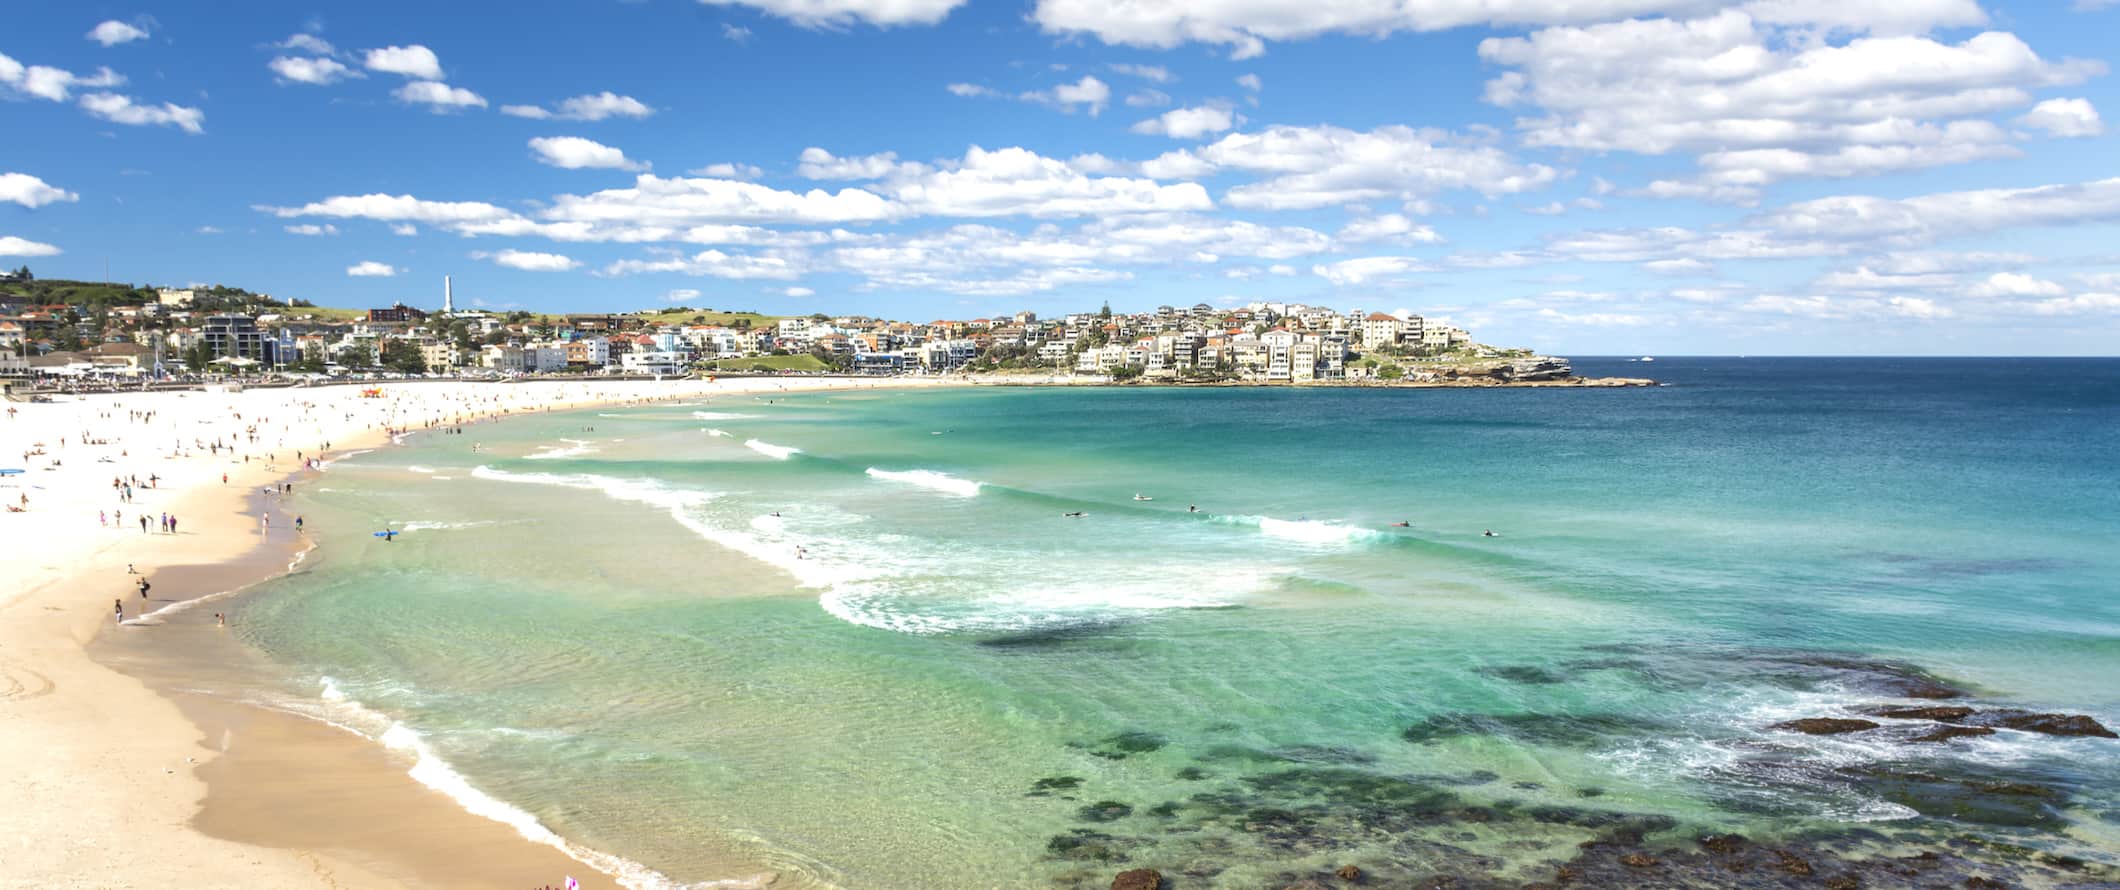 The famous Bondi Beach on a bright and sunny day enar Sydney, Australia